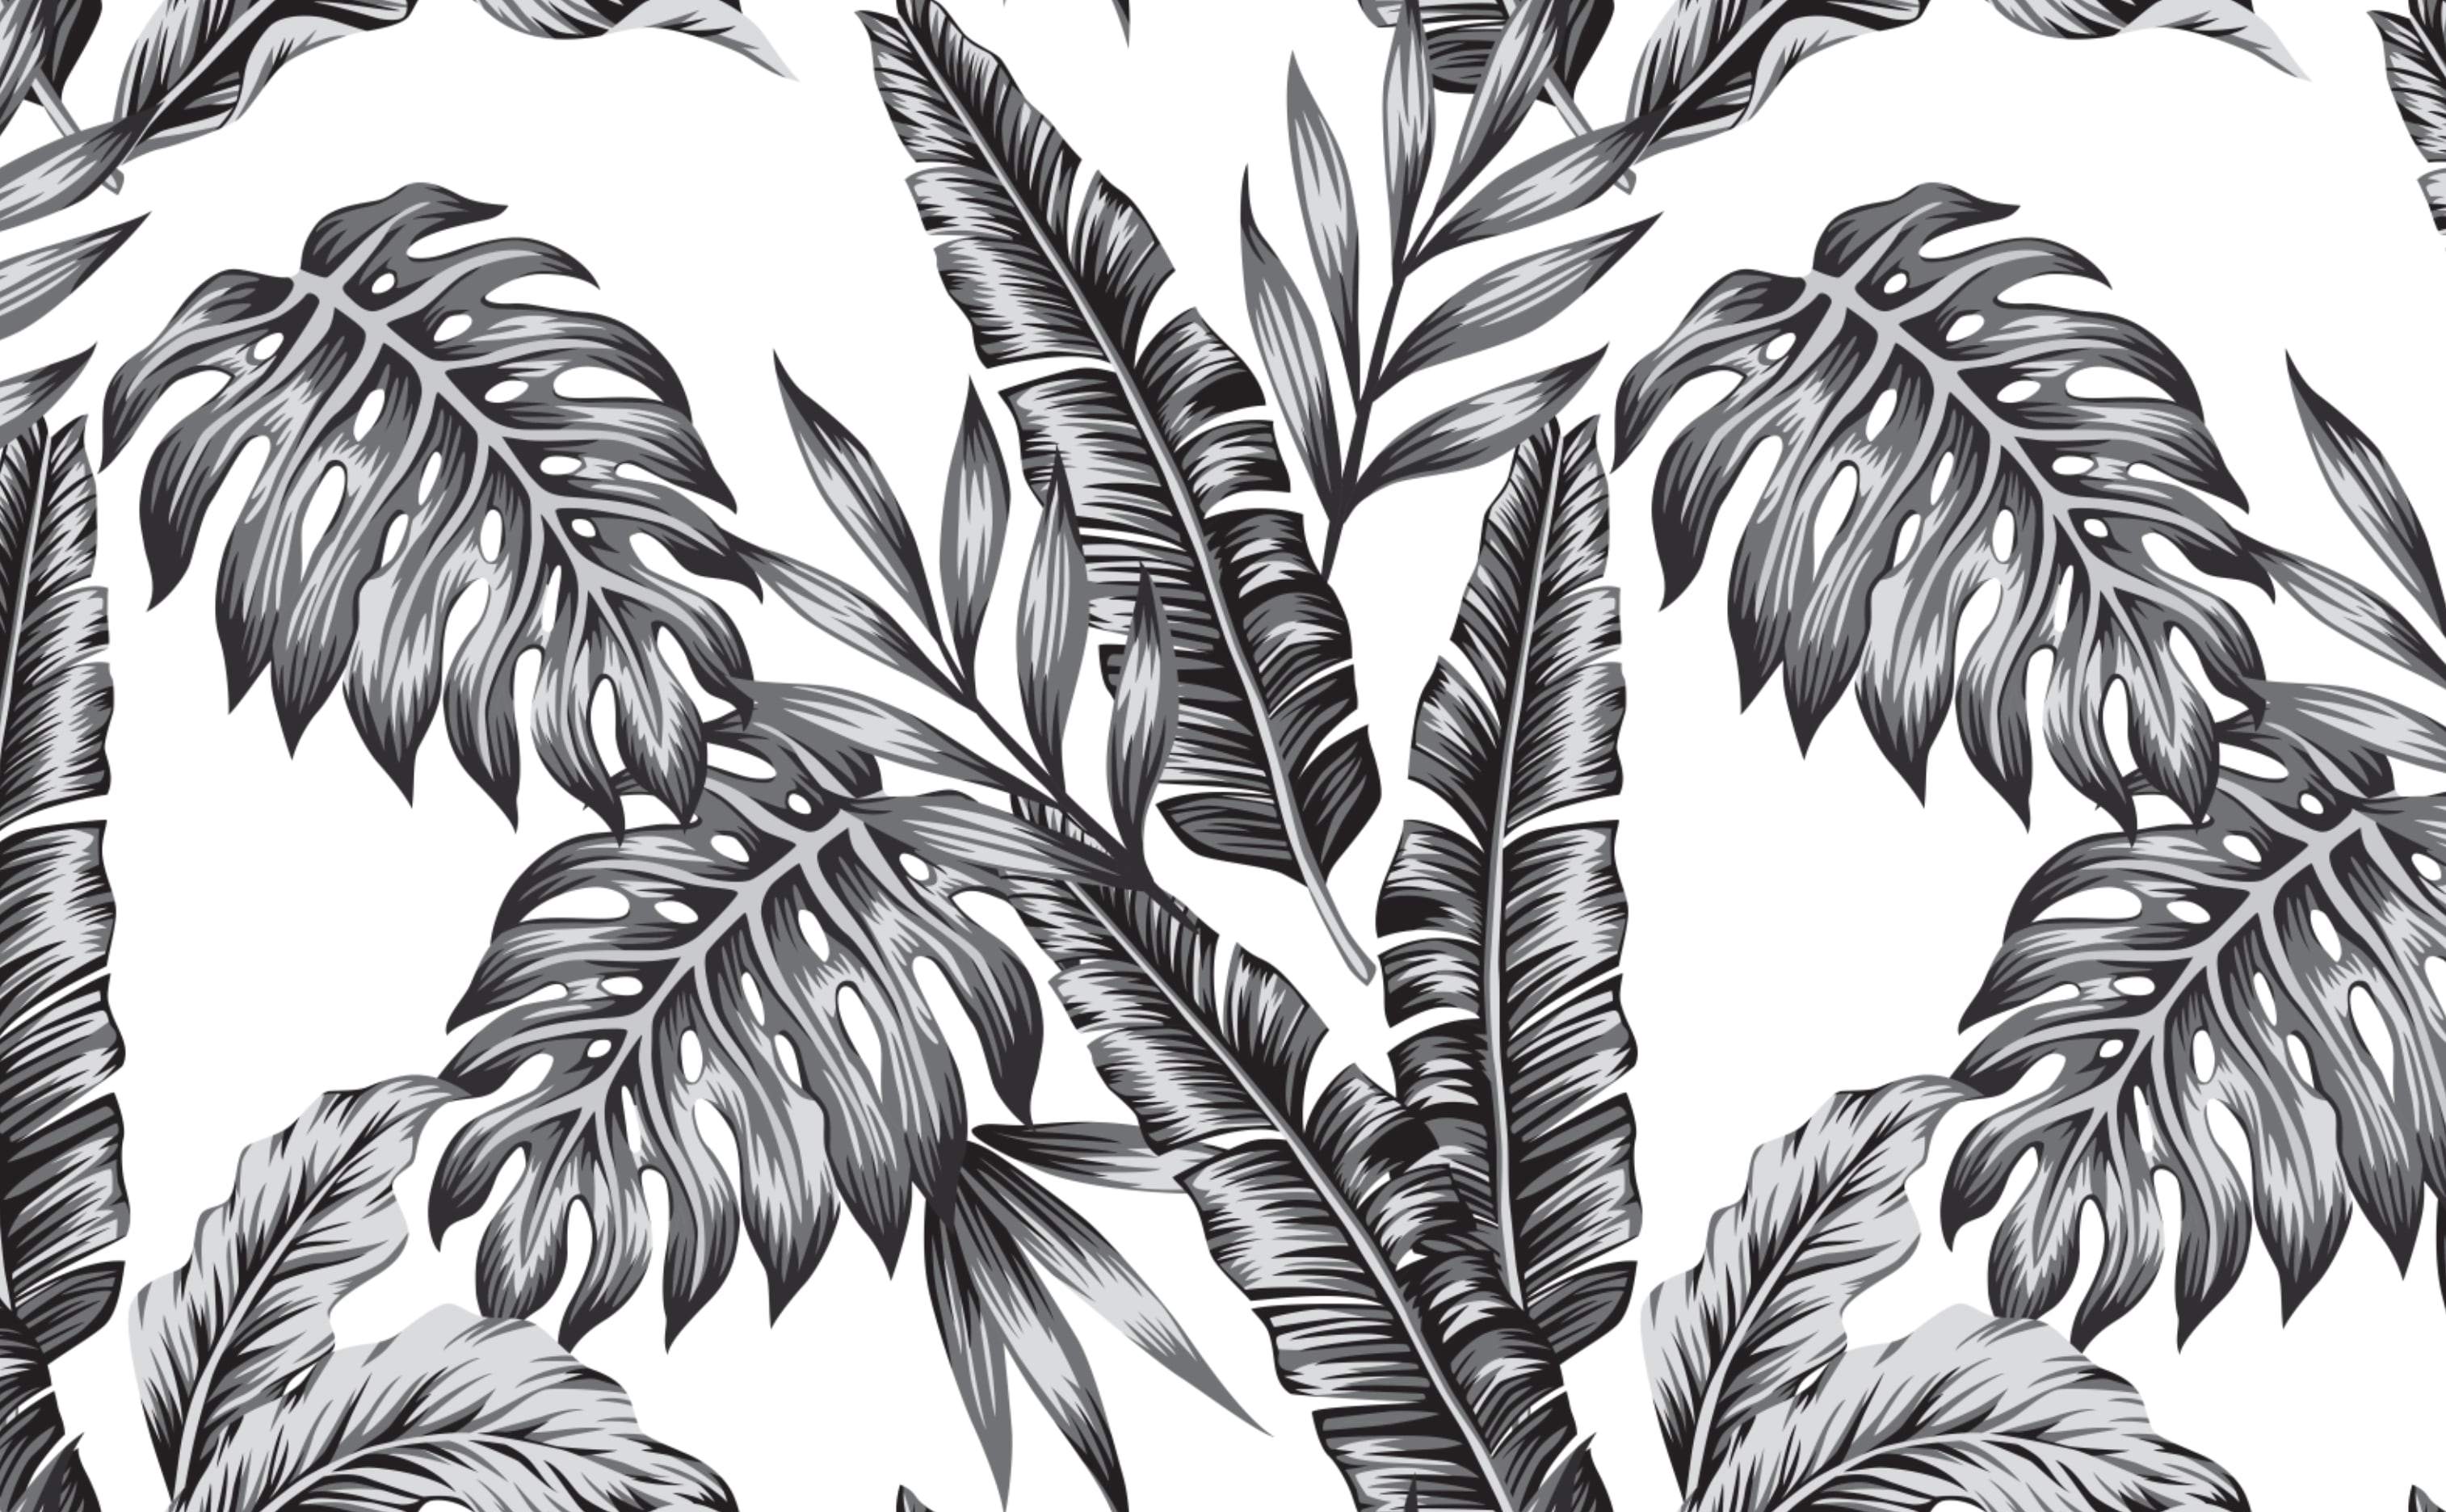 Palm Leaves Tropical Wallpaper for Walls. Retro Palms Black